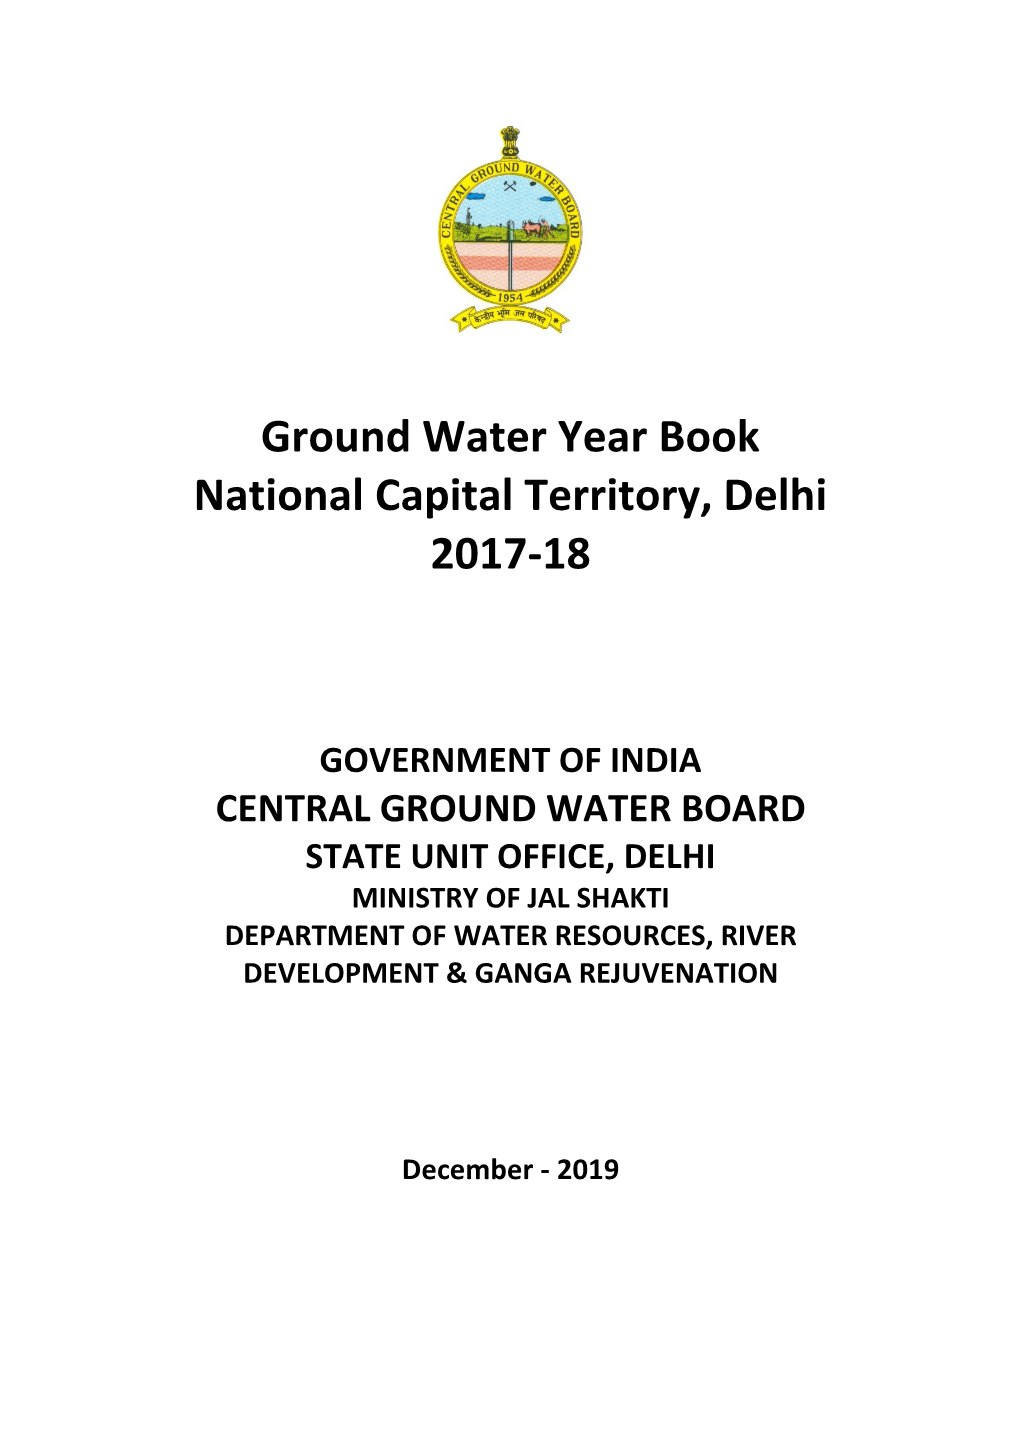 Ground Water Year Book National Capital Territory, Delhi 2017-18